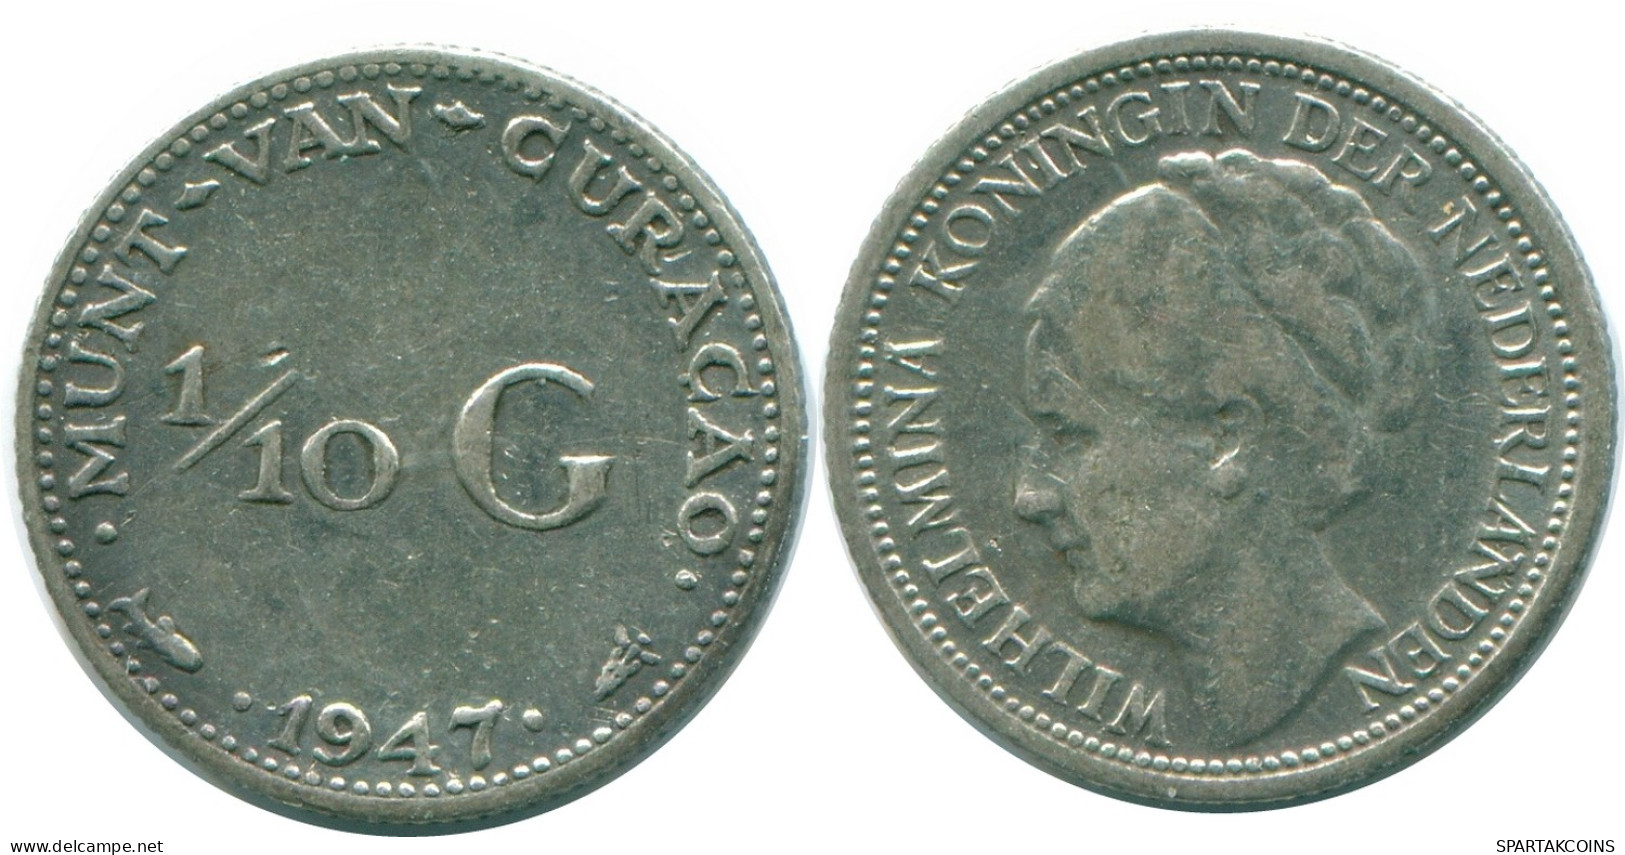 1/10 GULDEN 1947 CURACAO Netherlands SILVER Colonial Coin #NL11848.3.U - Curacao